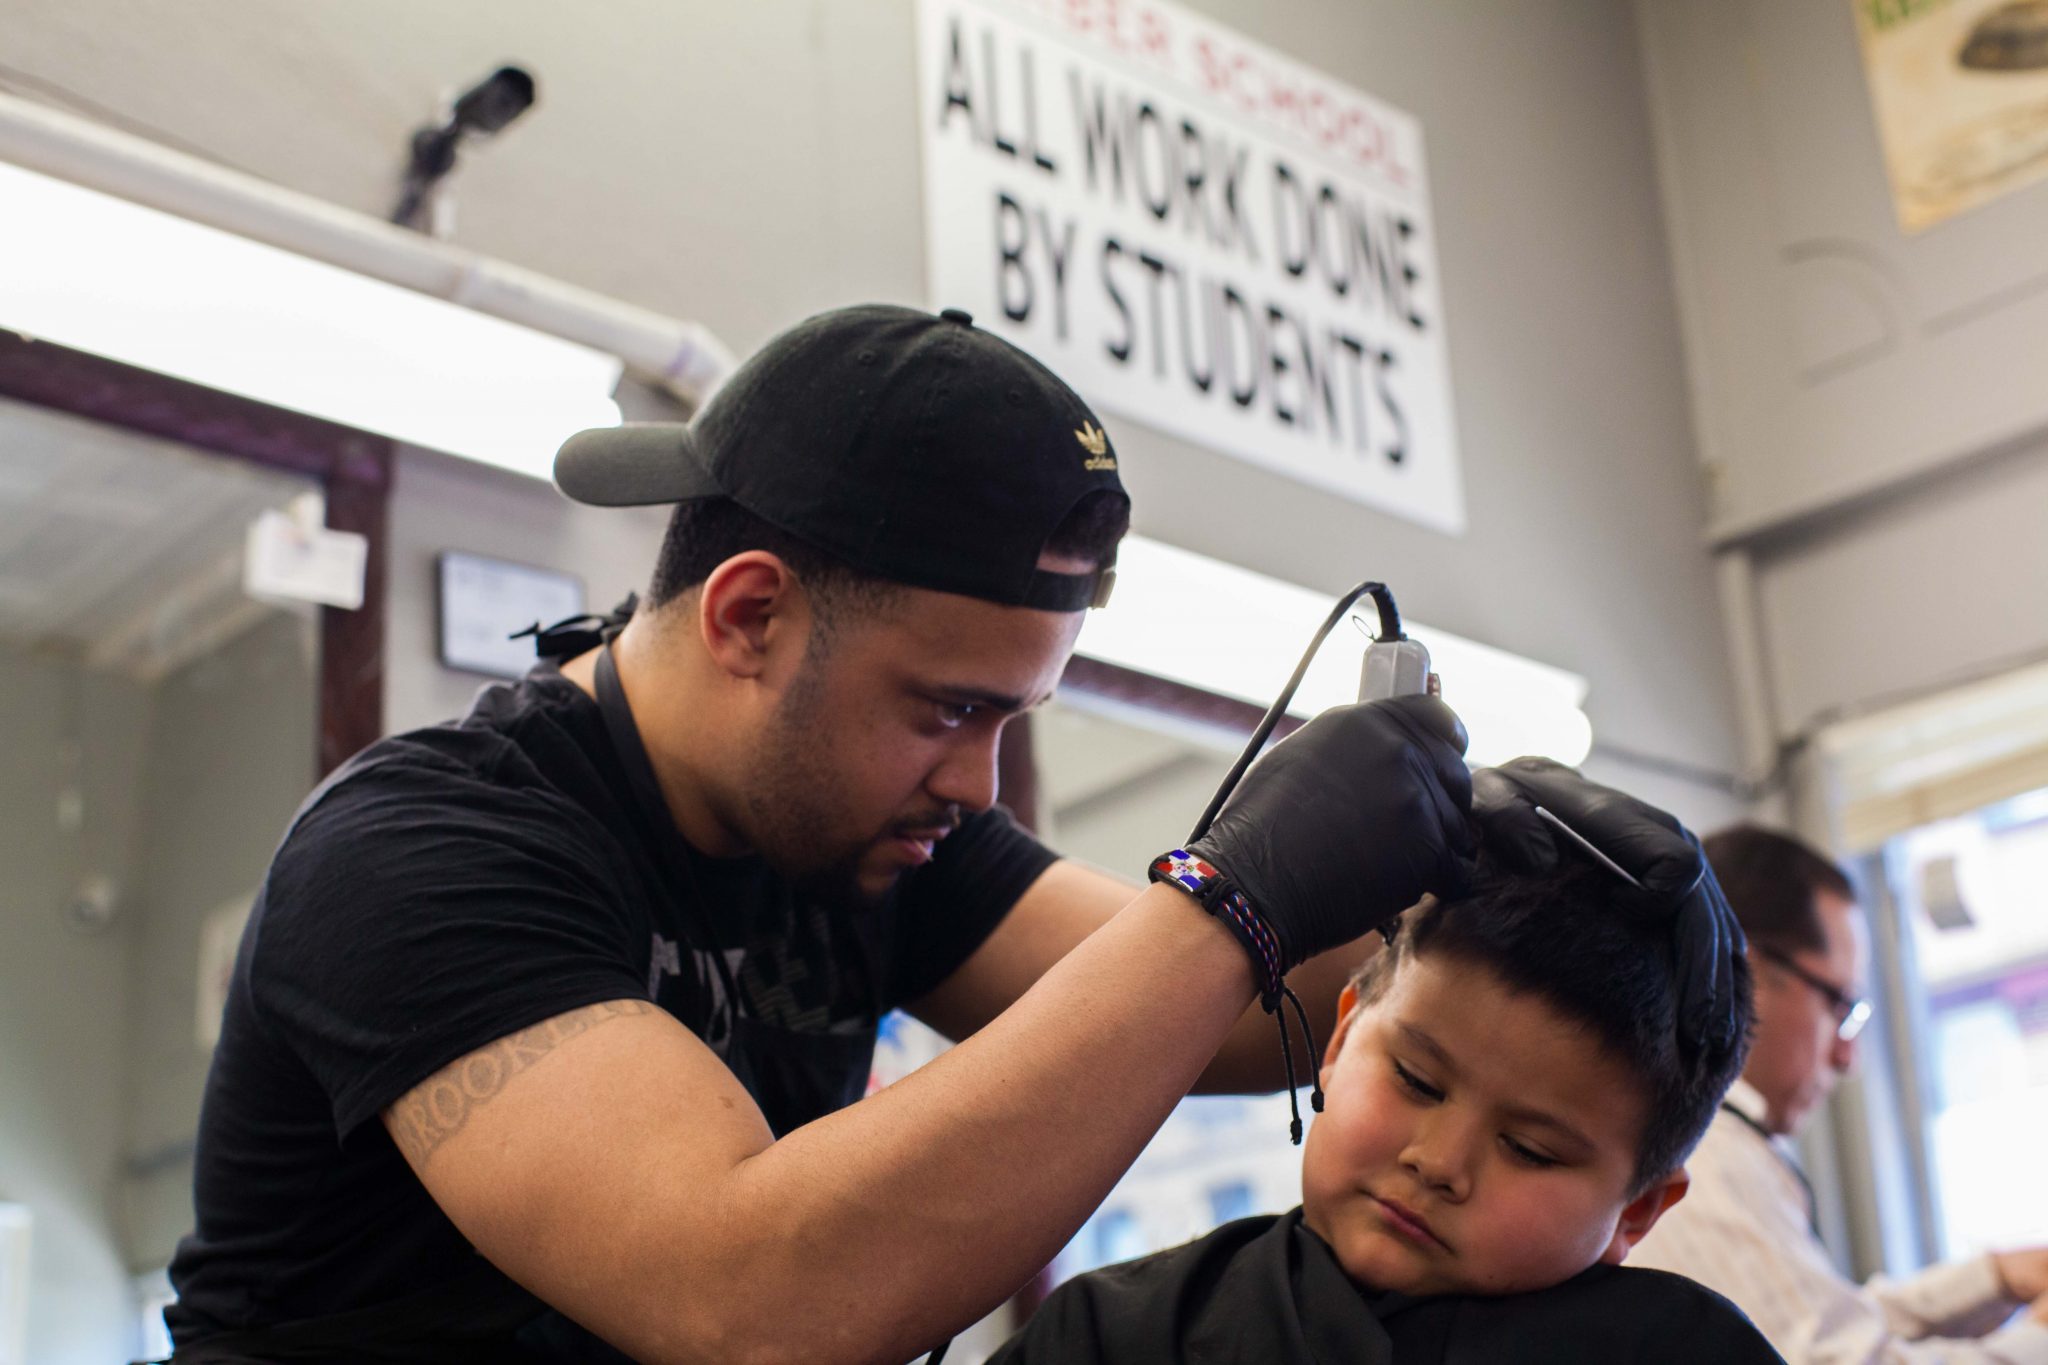 Man cutting a young boys hair